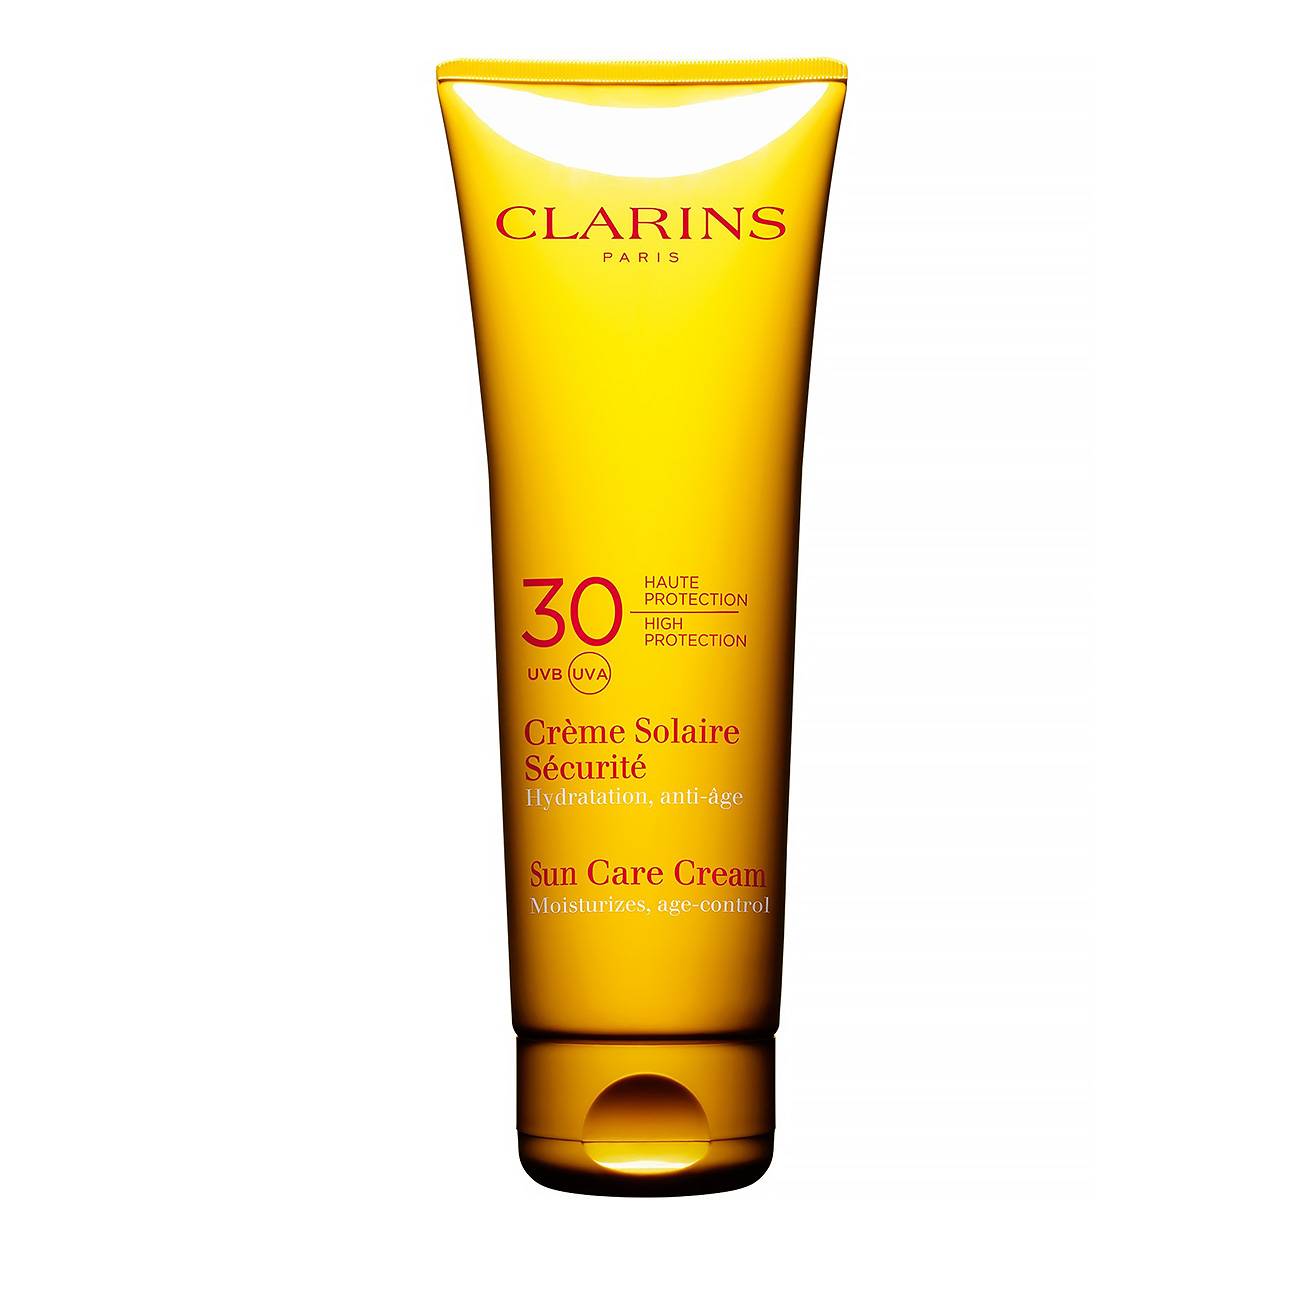 Sun Care Cream High Protection Uvb/ Uva 30 125ml Clarins imagine 2021 bestvalue.eu